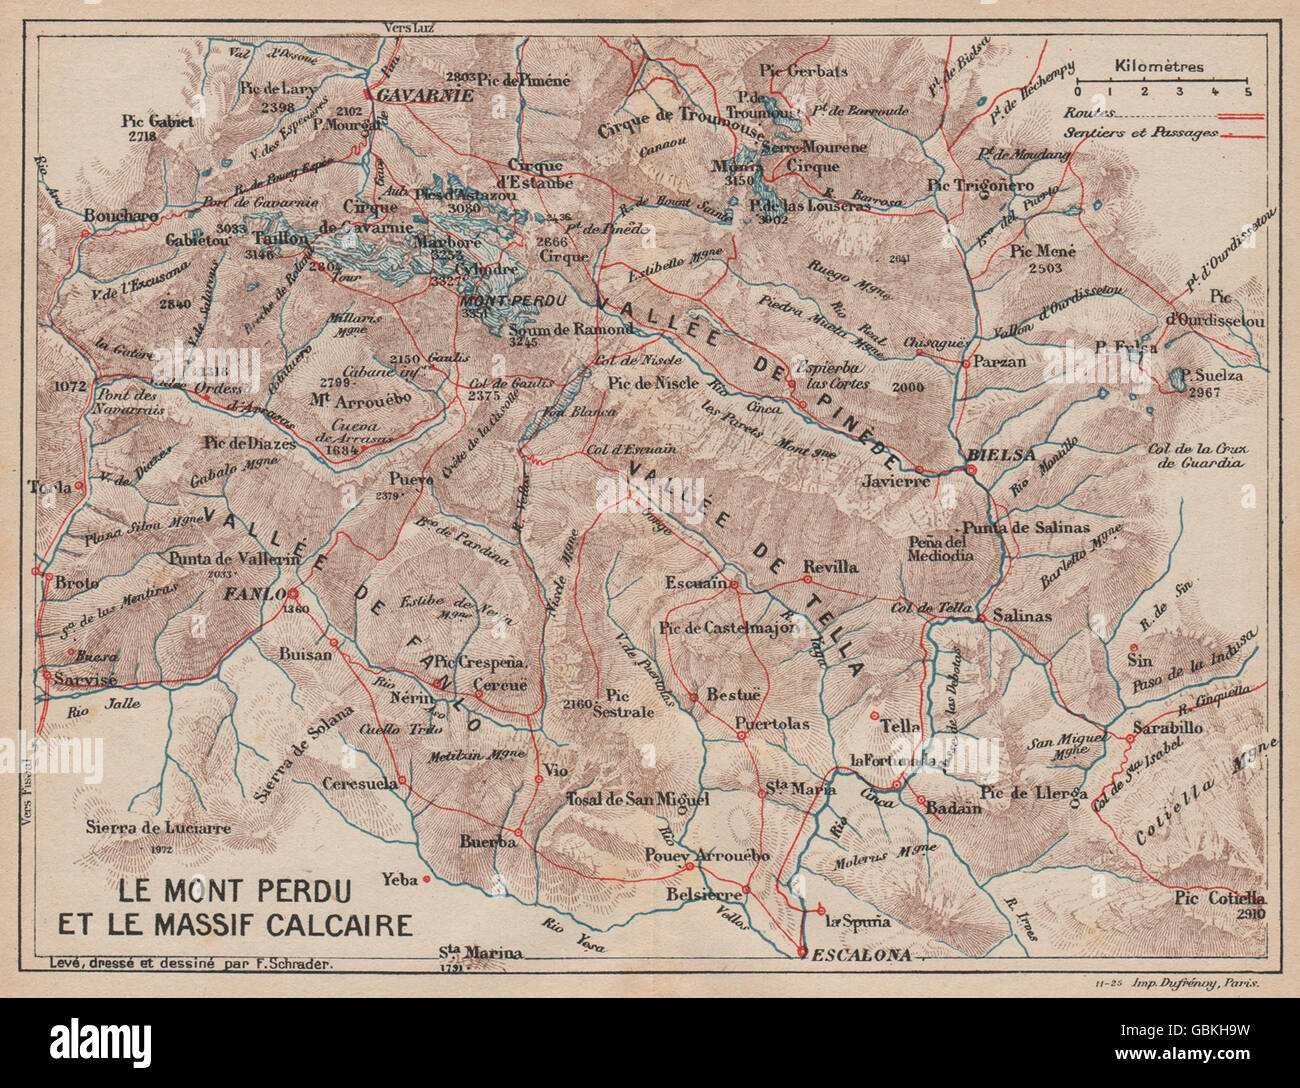 ORDESA MONTE PERDIDO. Mont Perdu Gavarnie Bielsa. Topo-guide. Pyrénées, 1921 map Stock Photo